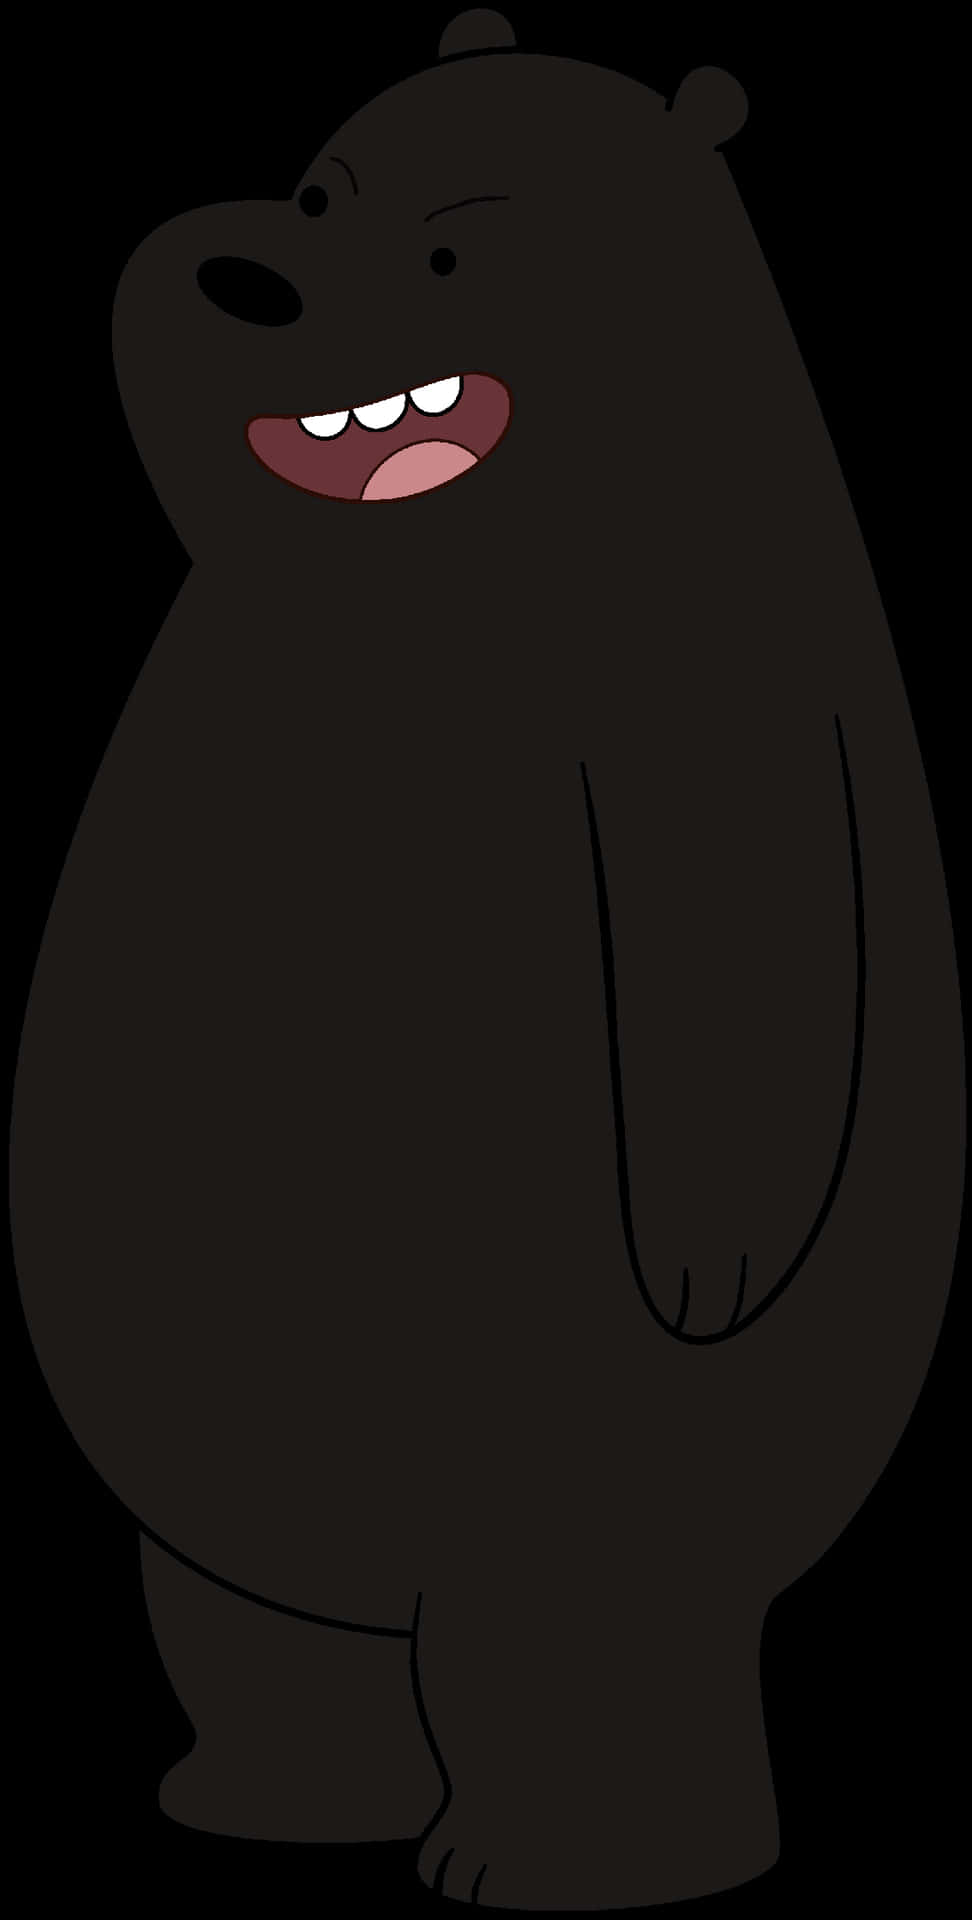 Smiling Cartoon Bear Vector PNG image